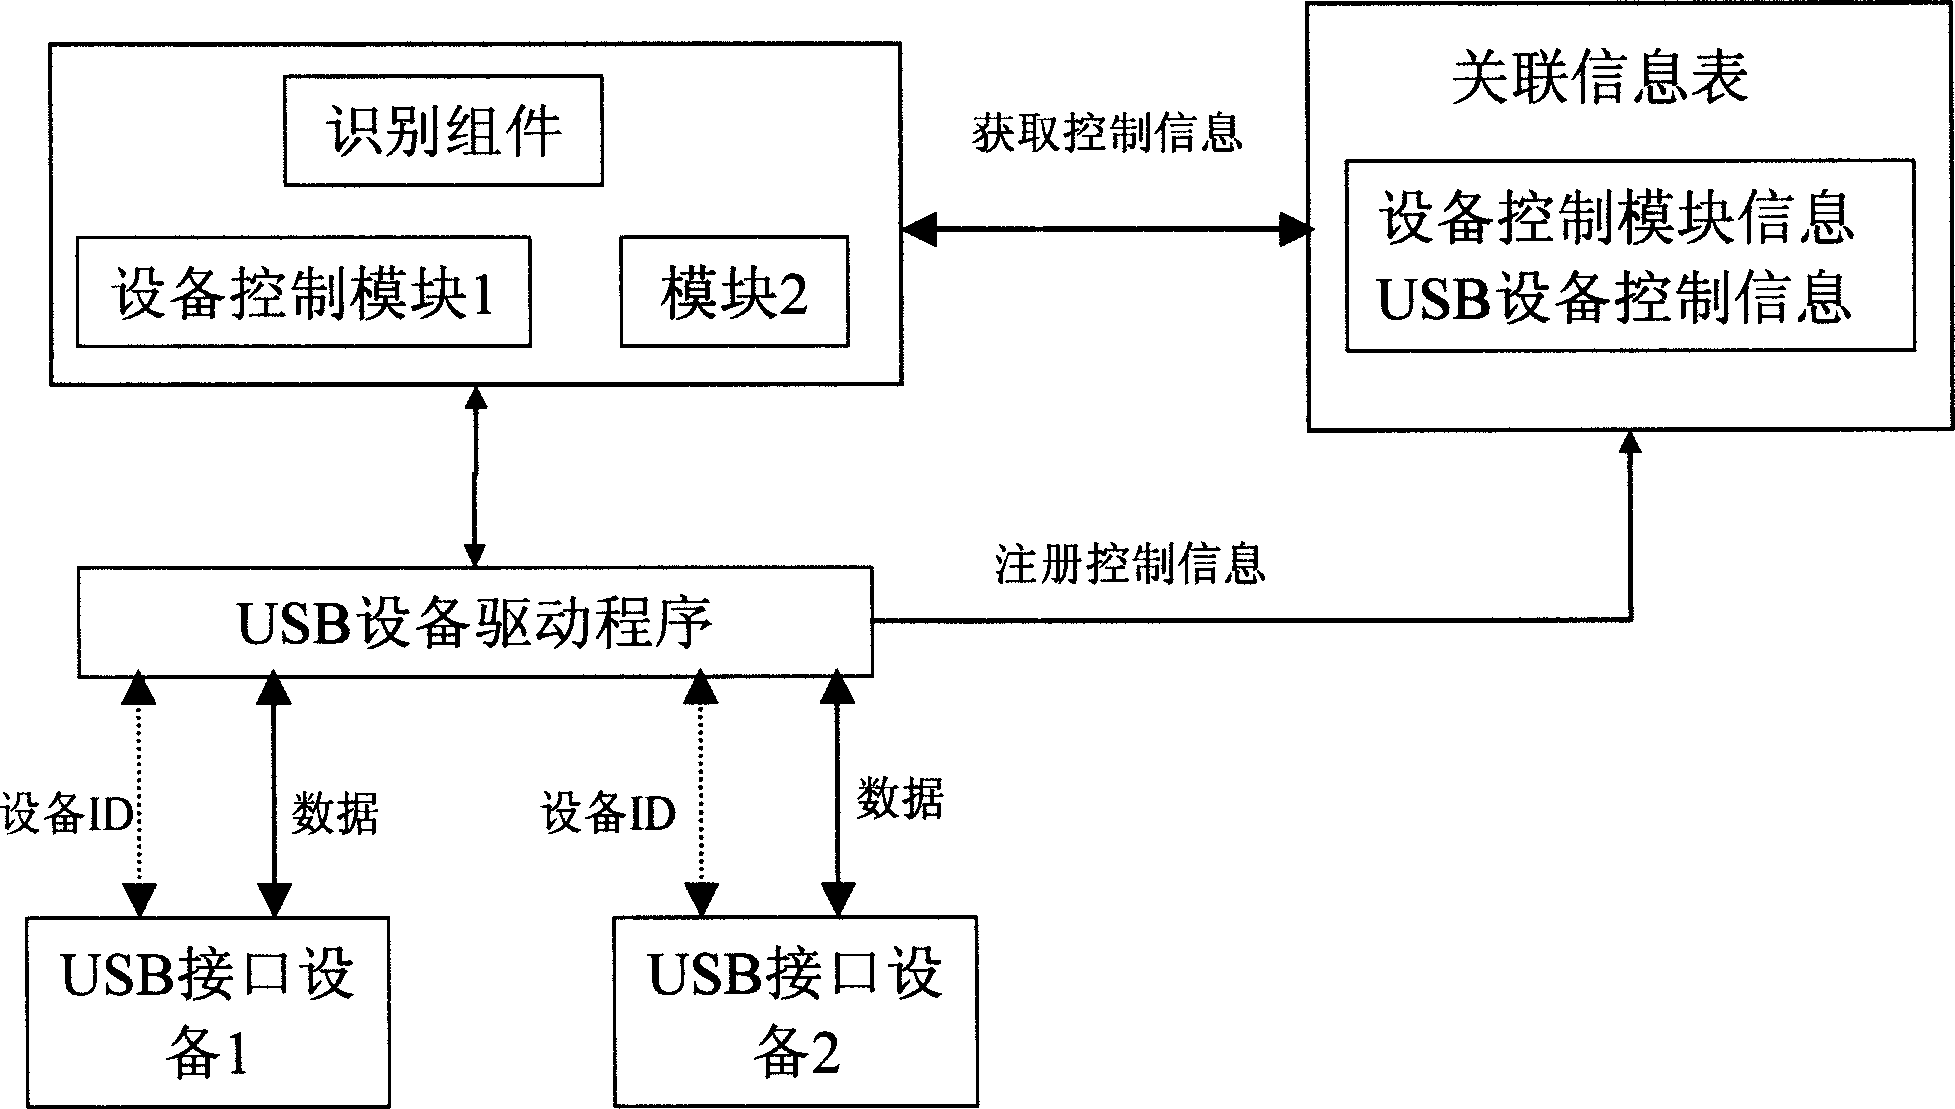 Identification method for USB interface equipment